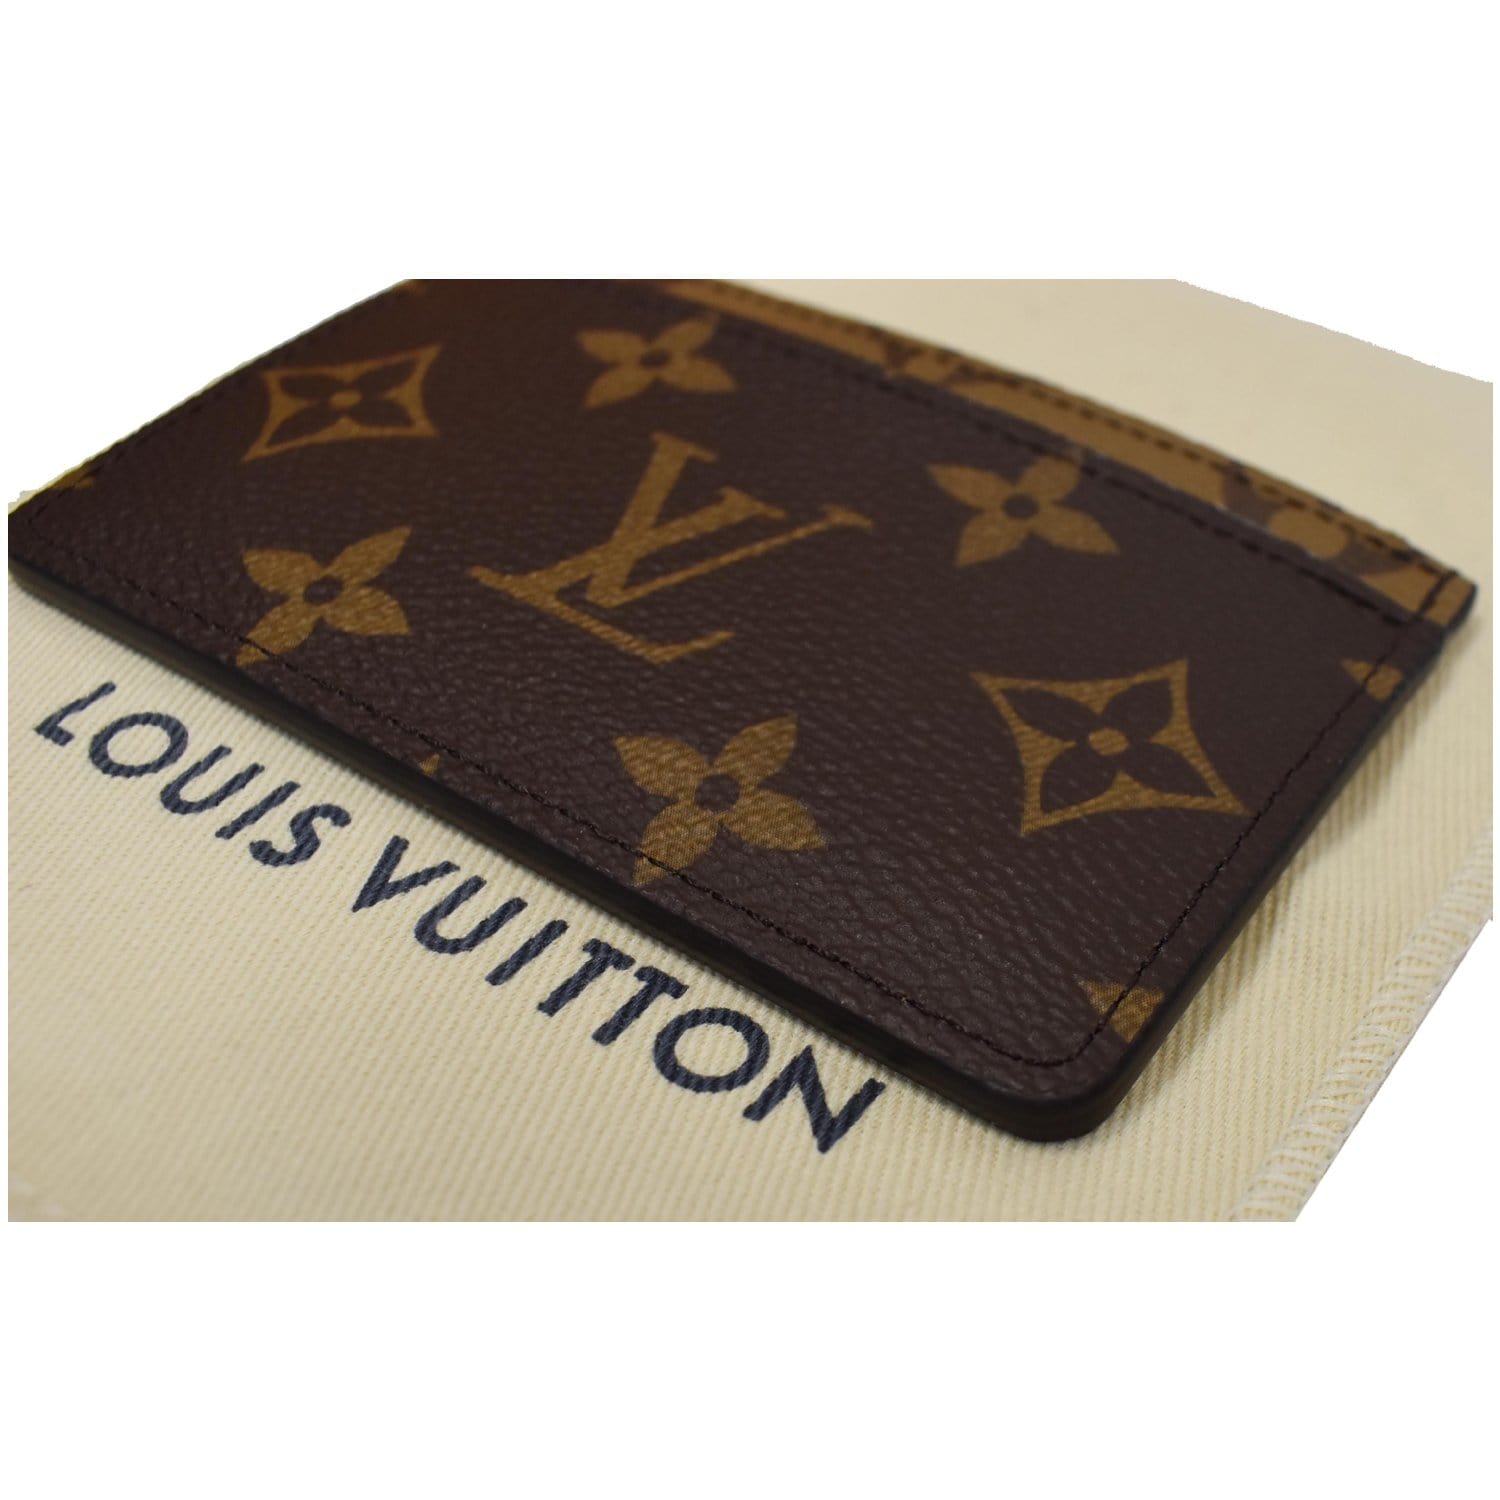 Louis Vuitton Monogram Reverse Canvas Card Holder